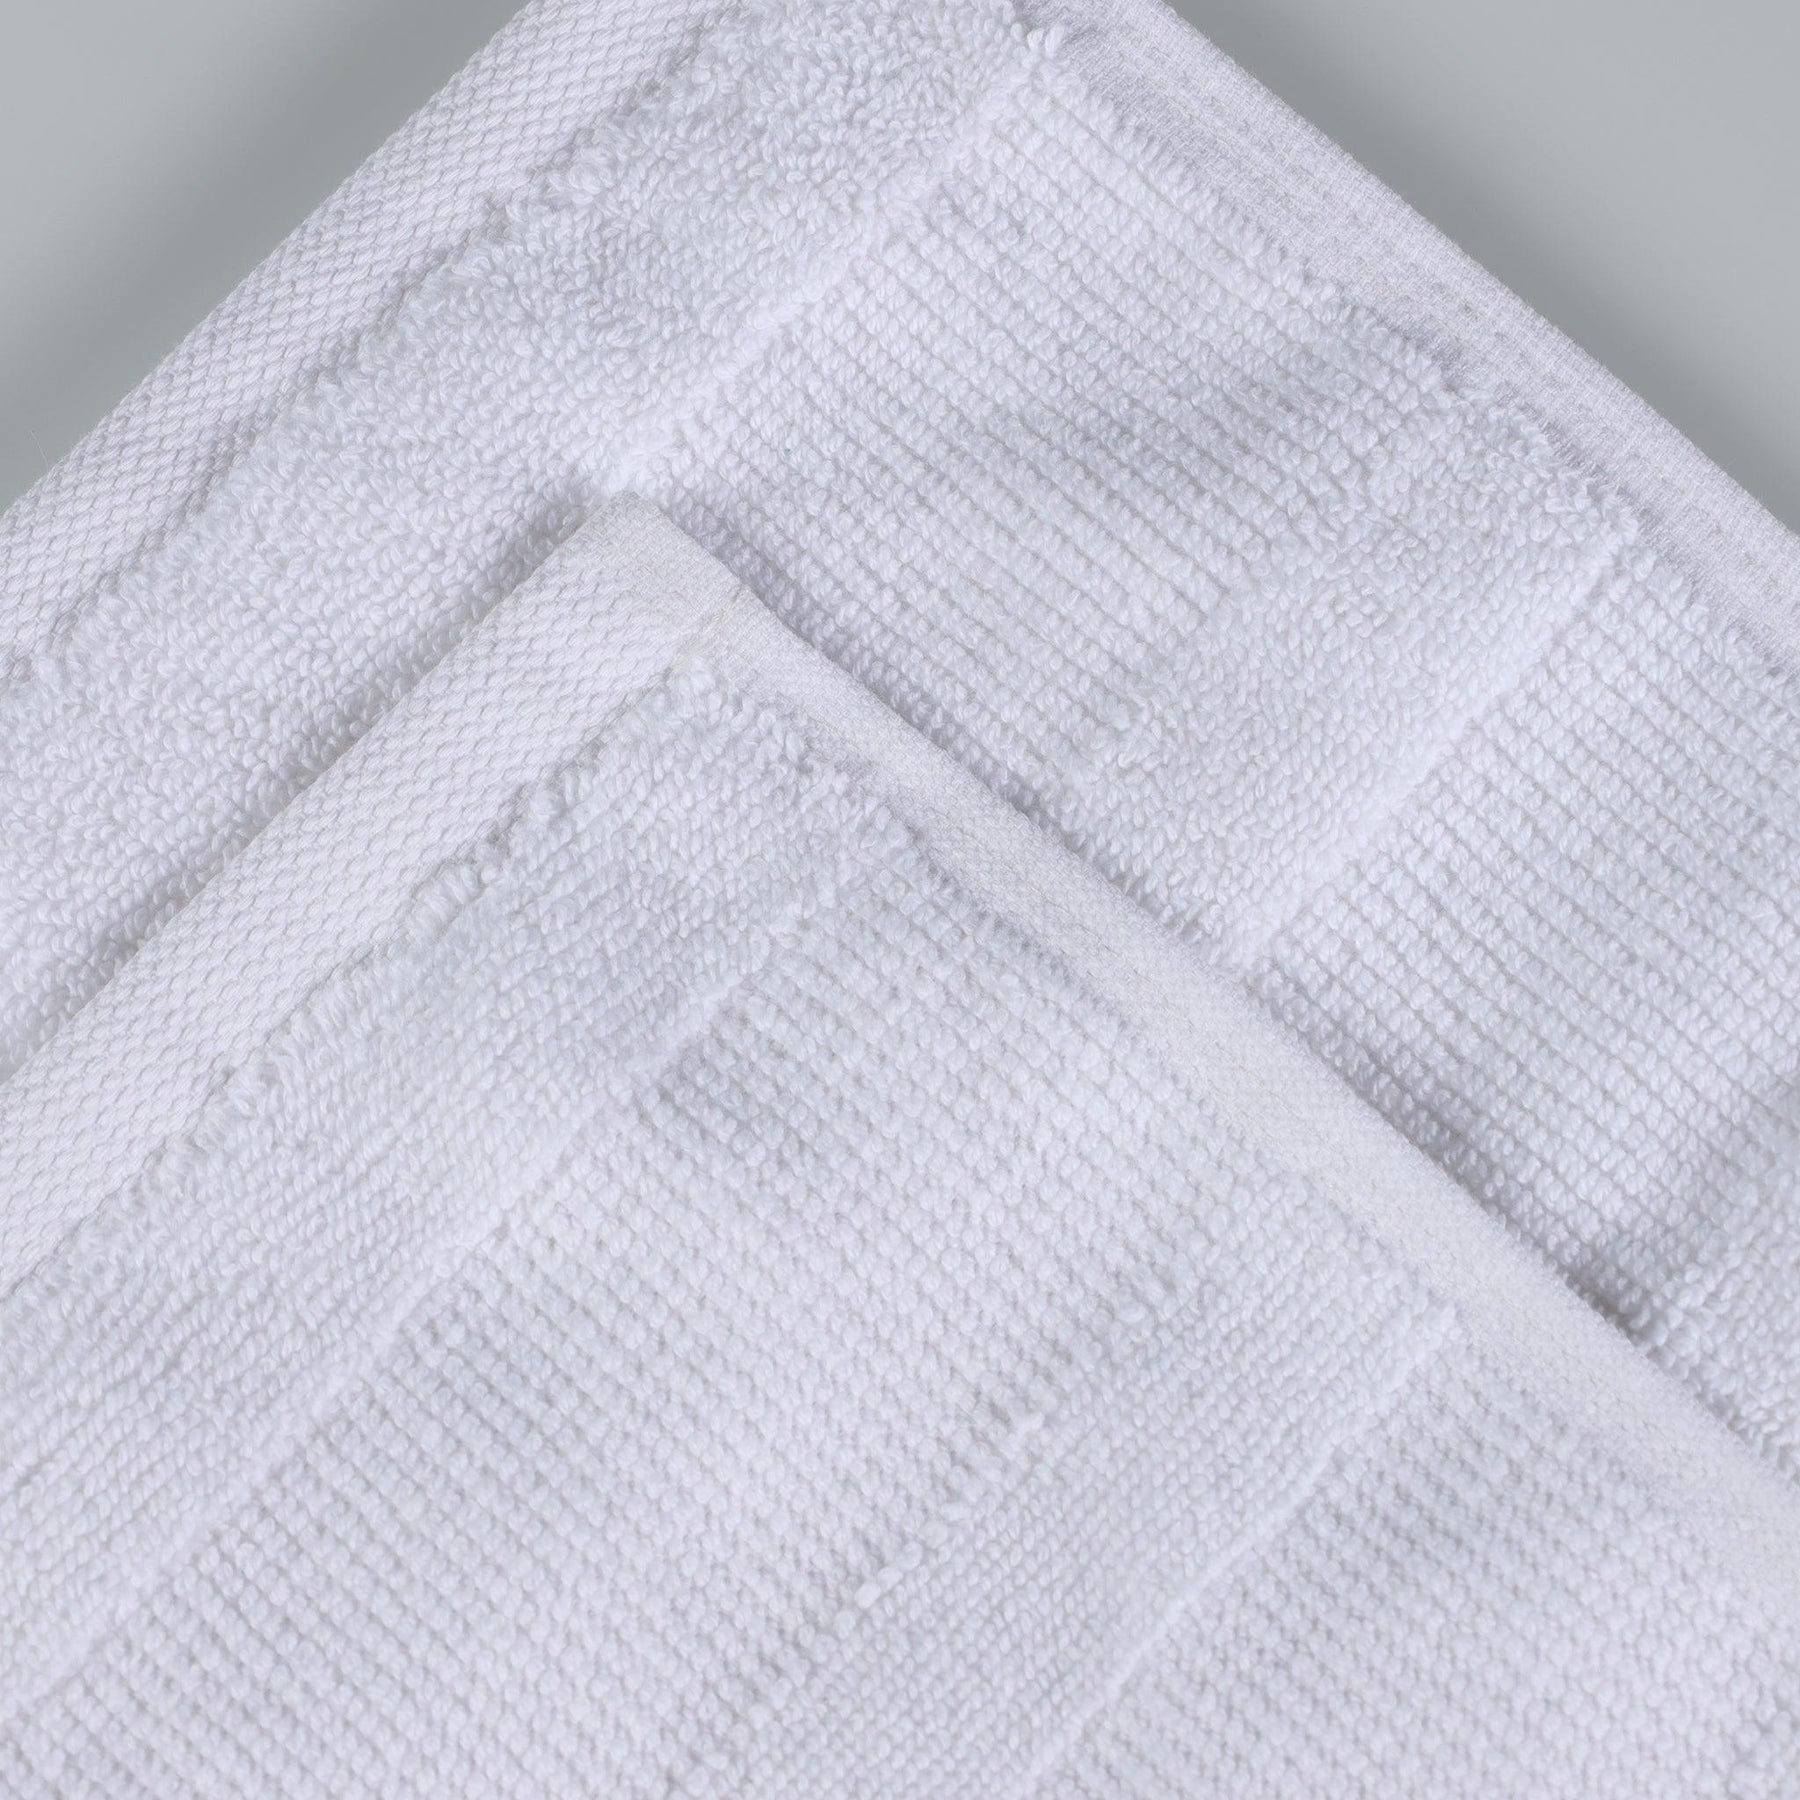 Ribbed Cotton Medium Weight 6 Piece Bath Towel Set - White